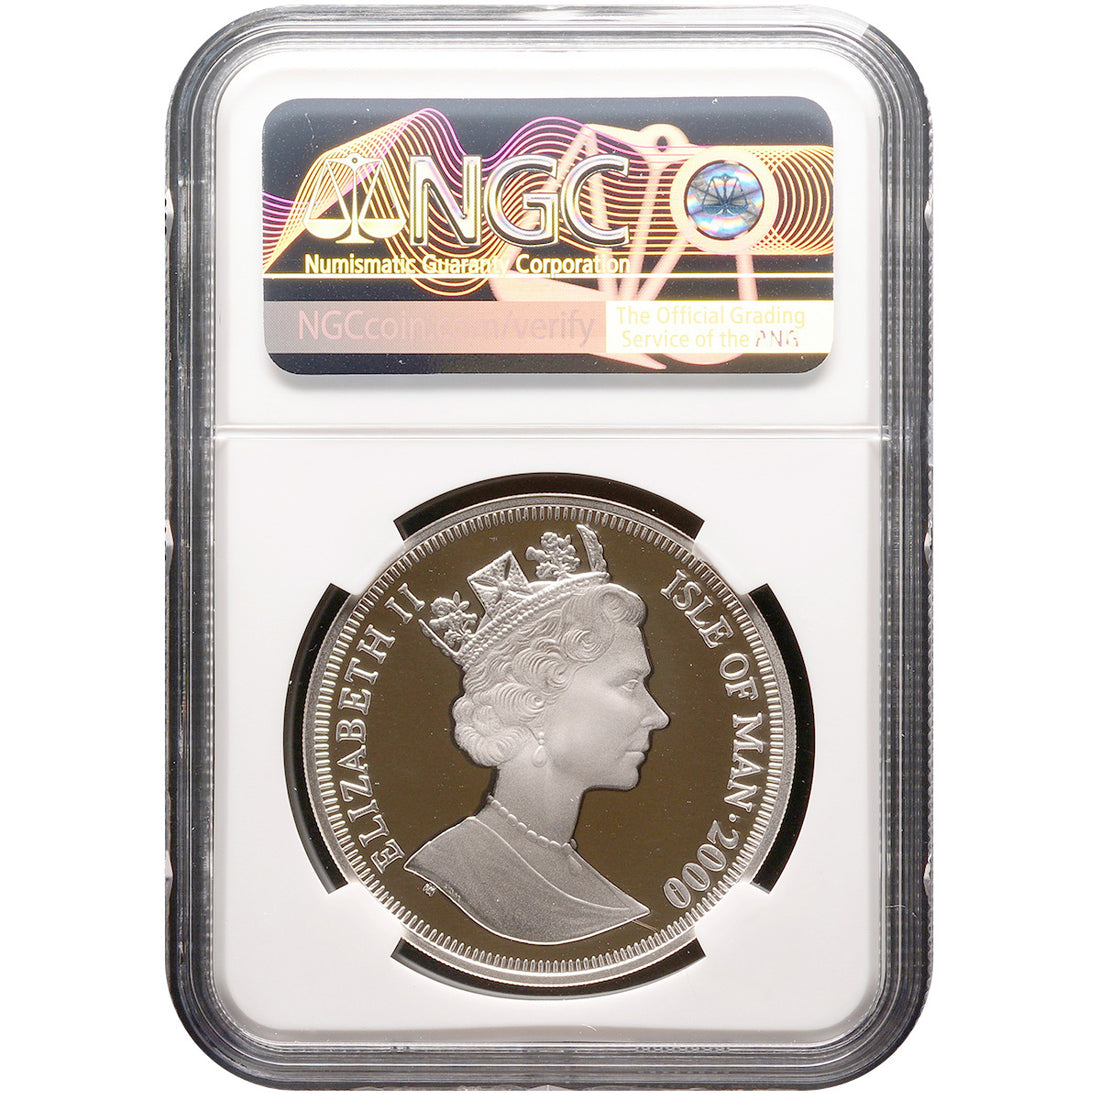 2000 1 oz MILLENNIUM Gilt Isle of Man Gilt Silver Proof Coin PF 70 - OZB